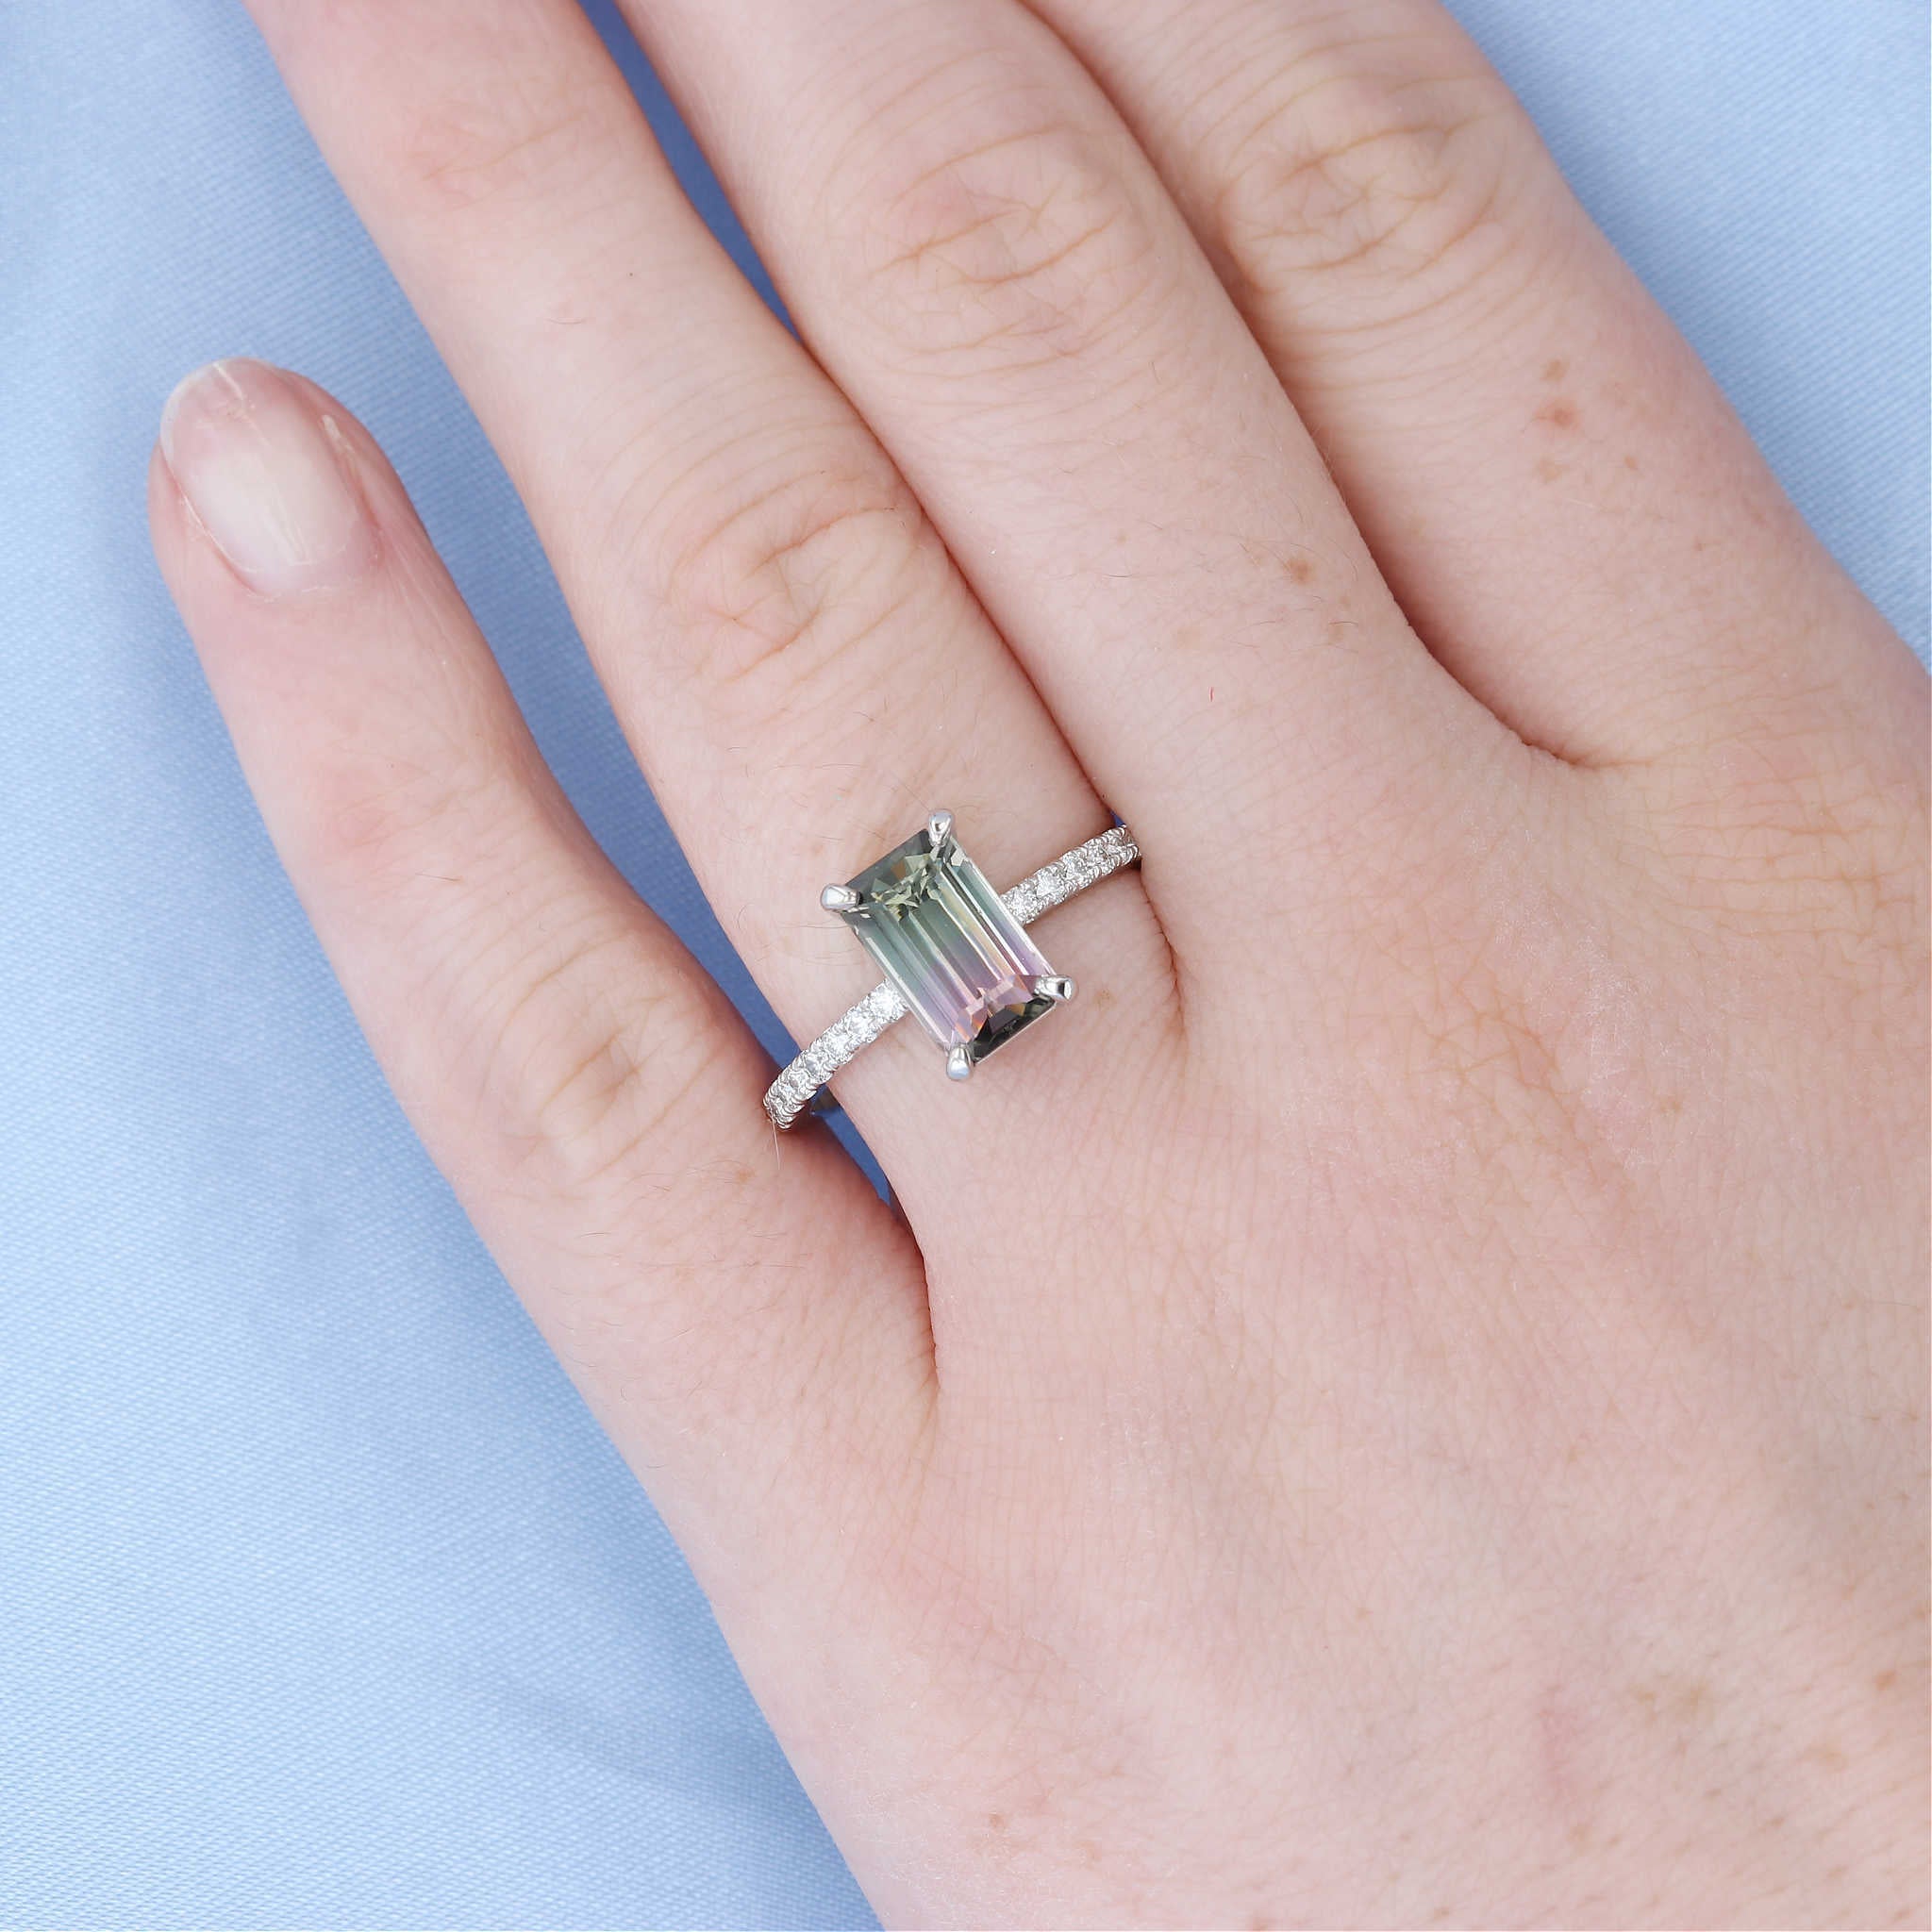 Emerald Cut Watermelon Tourmaline Engagement Ring on a Finger